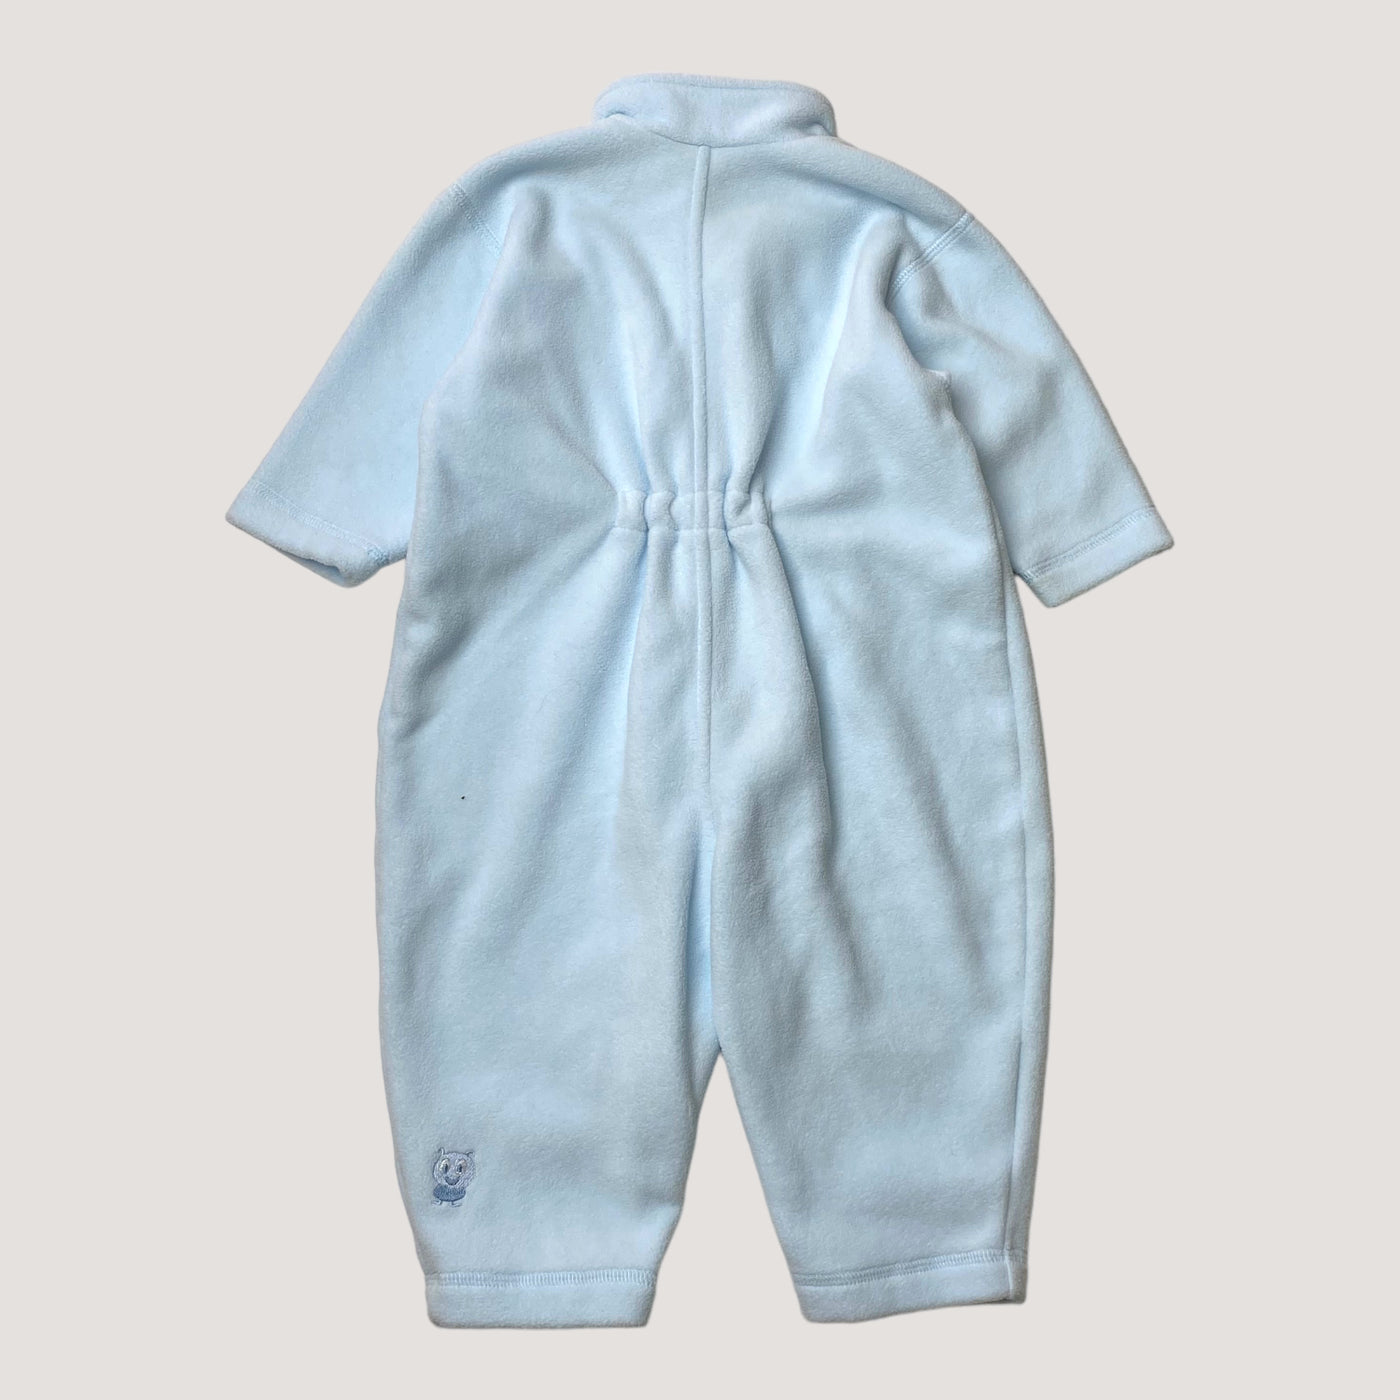 Reima fleece jumpsuit, baby blue | 68cm